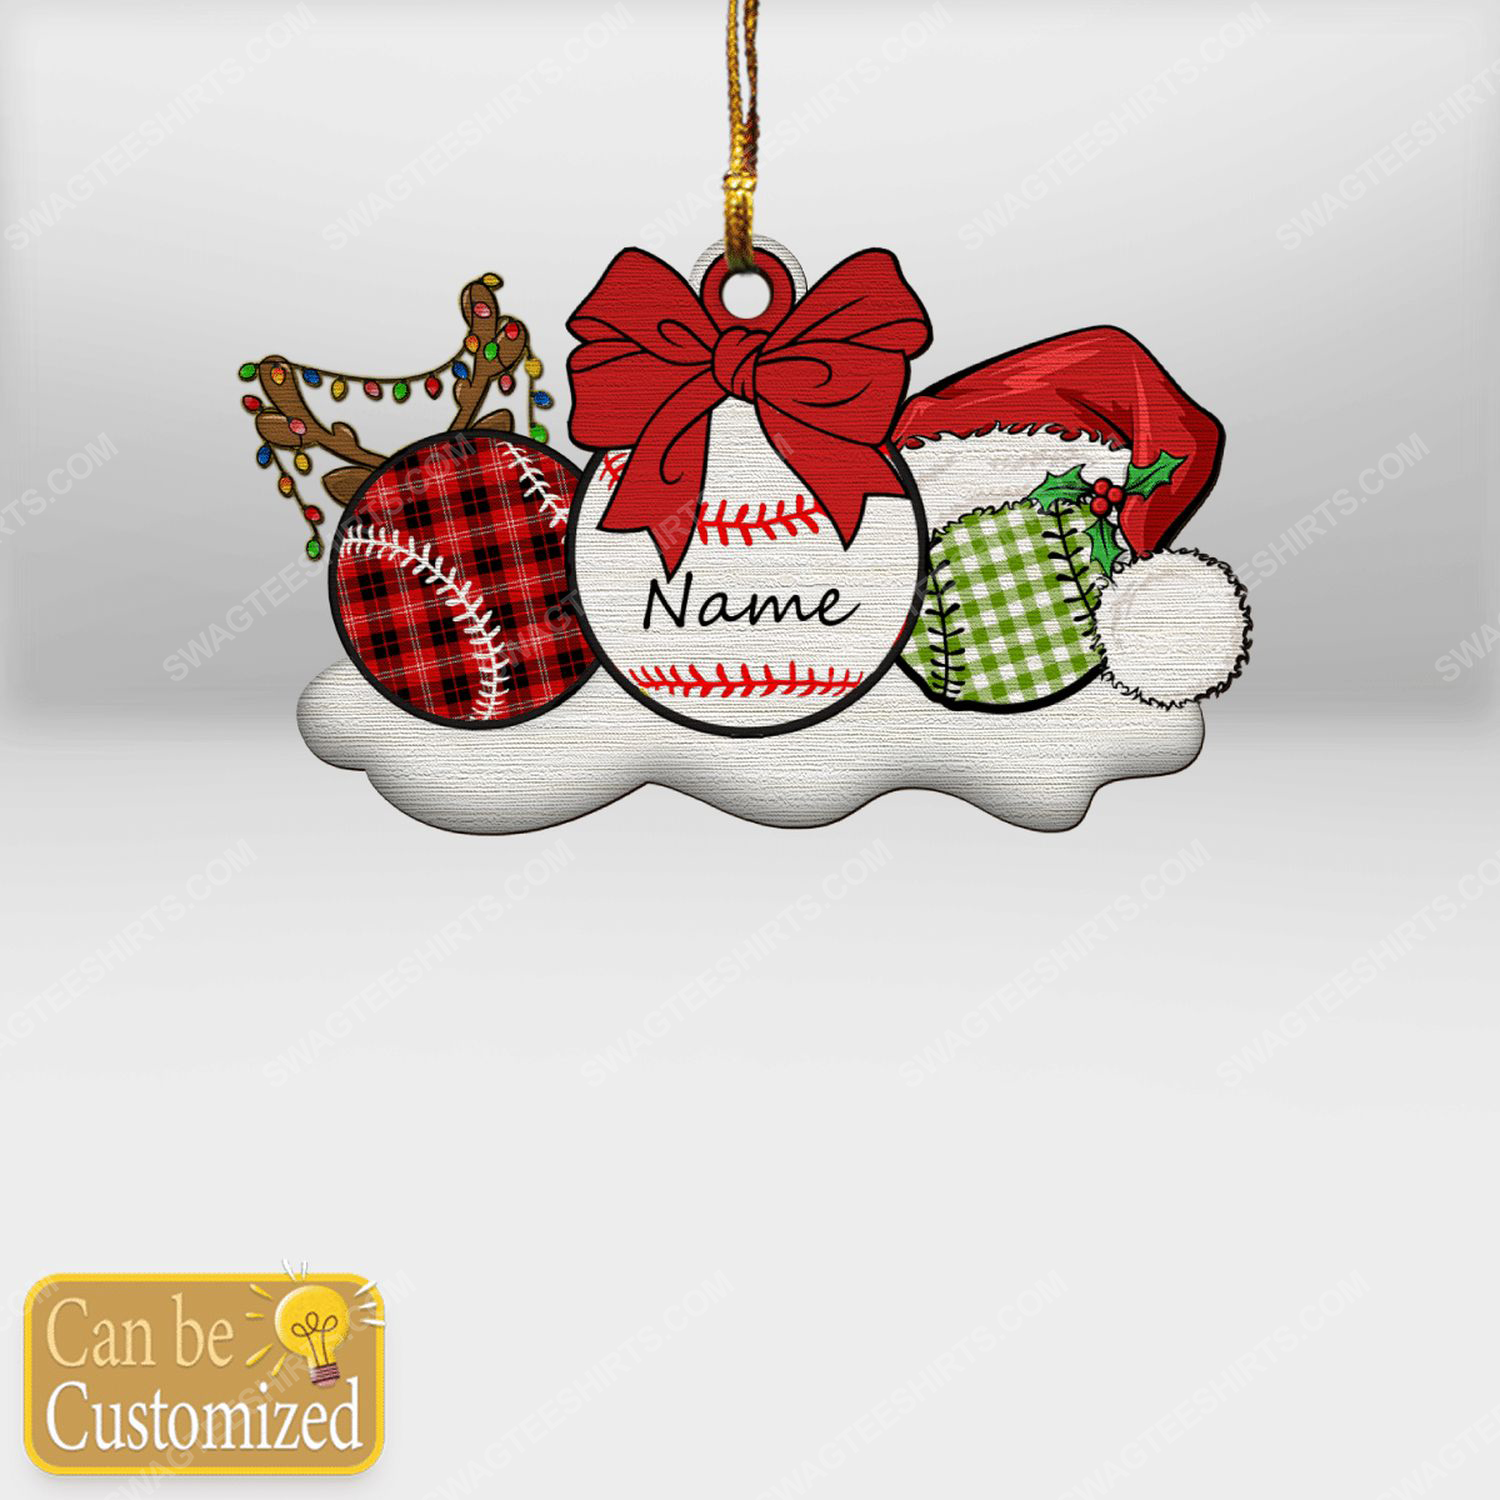 Custom baseball ball christmas gift ornament 1 - Copy (3)